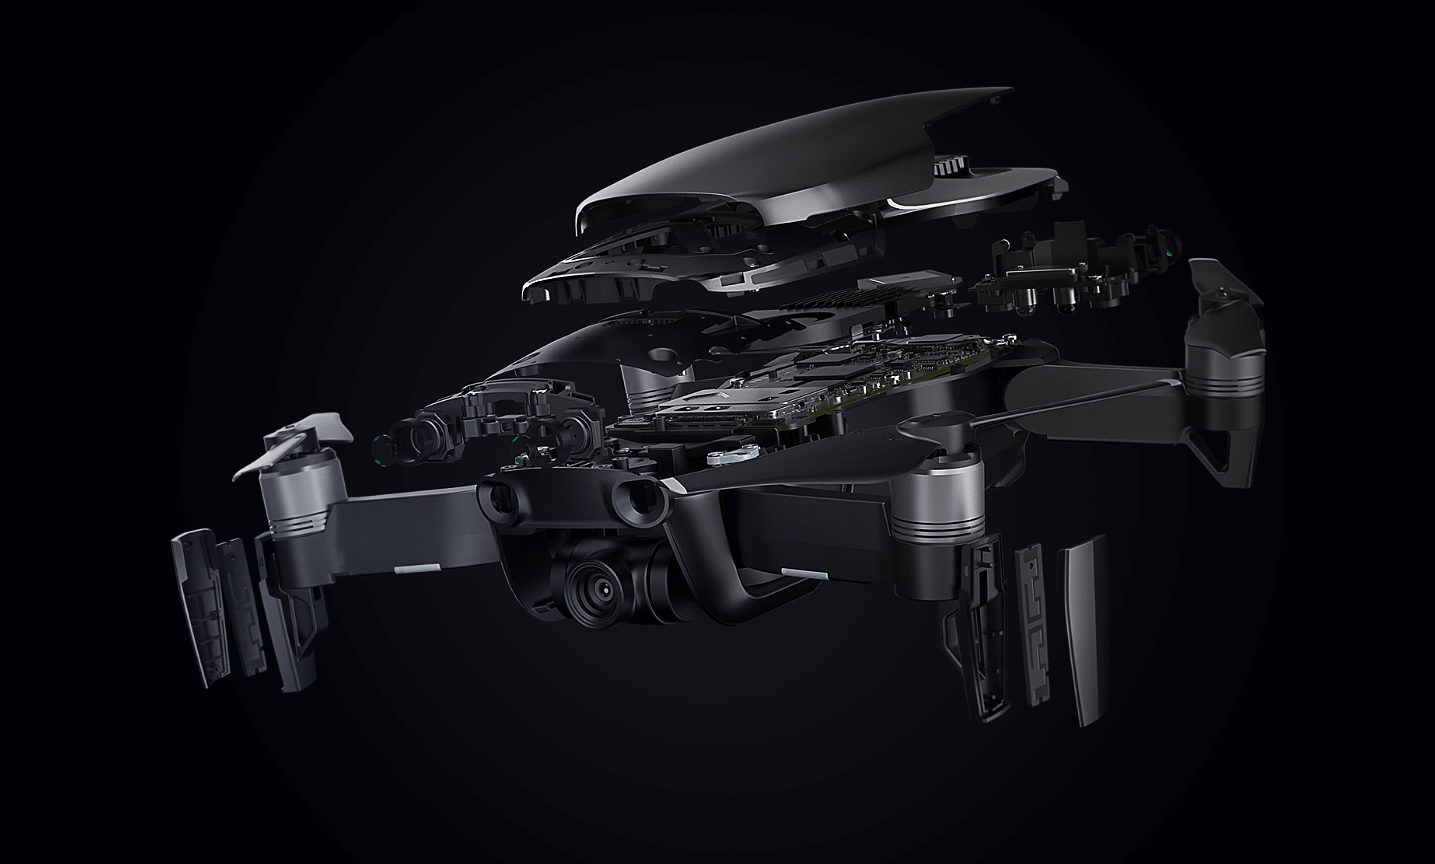 Designing the DJI Mavic Air, the foldable 4K Drone